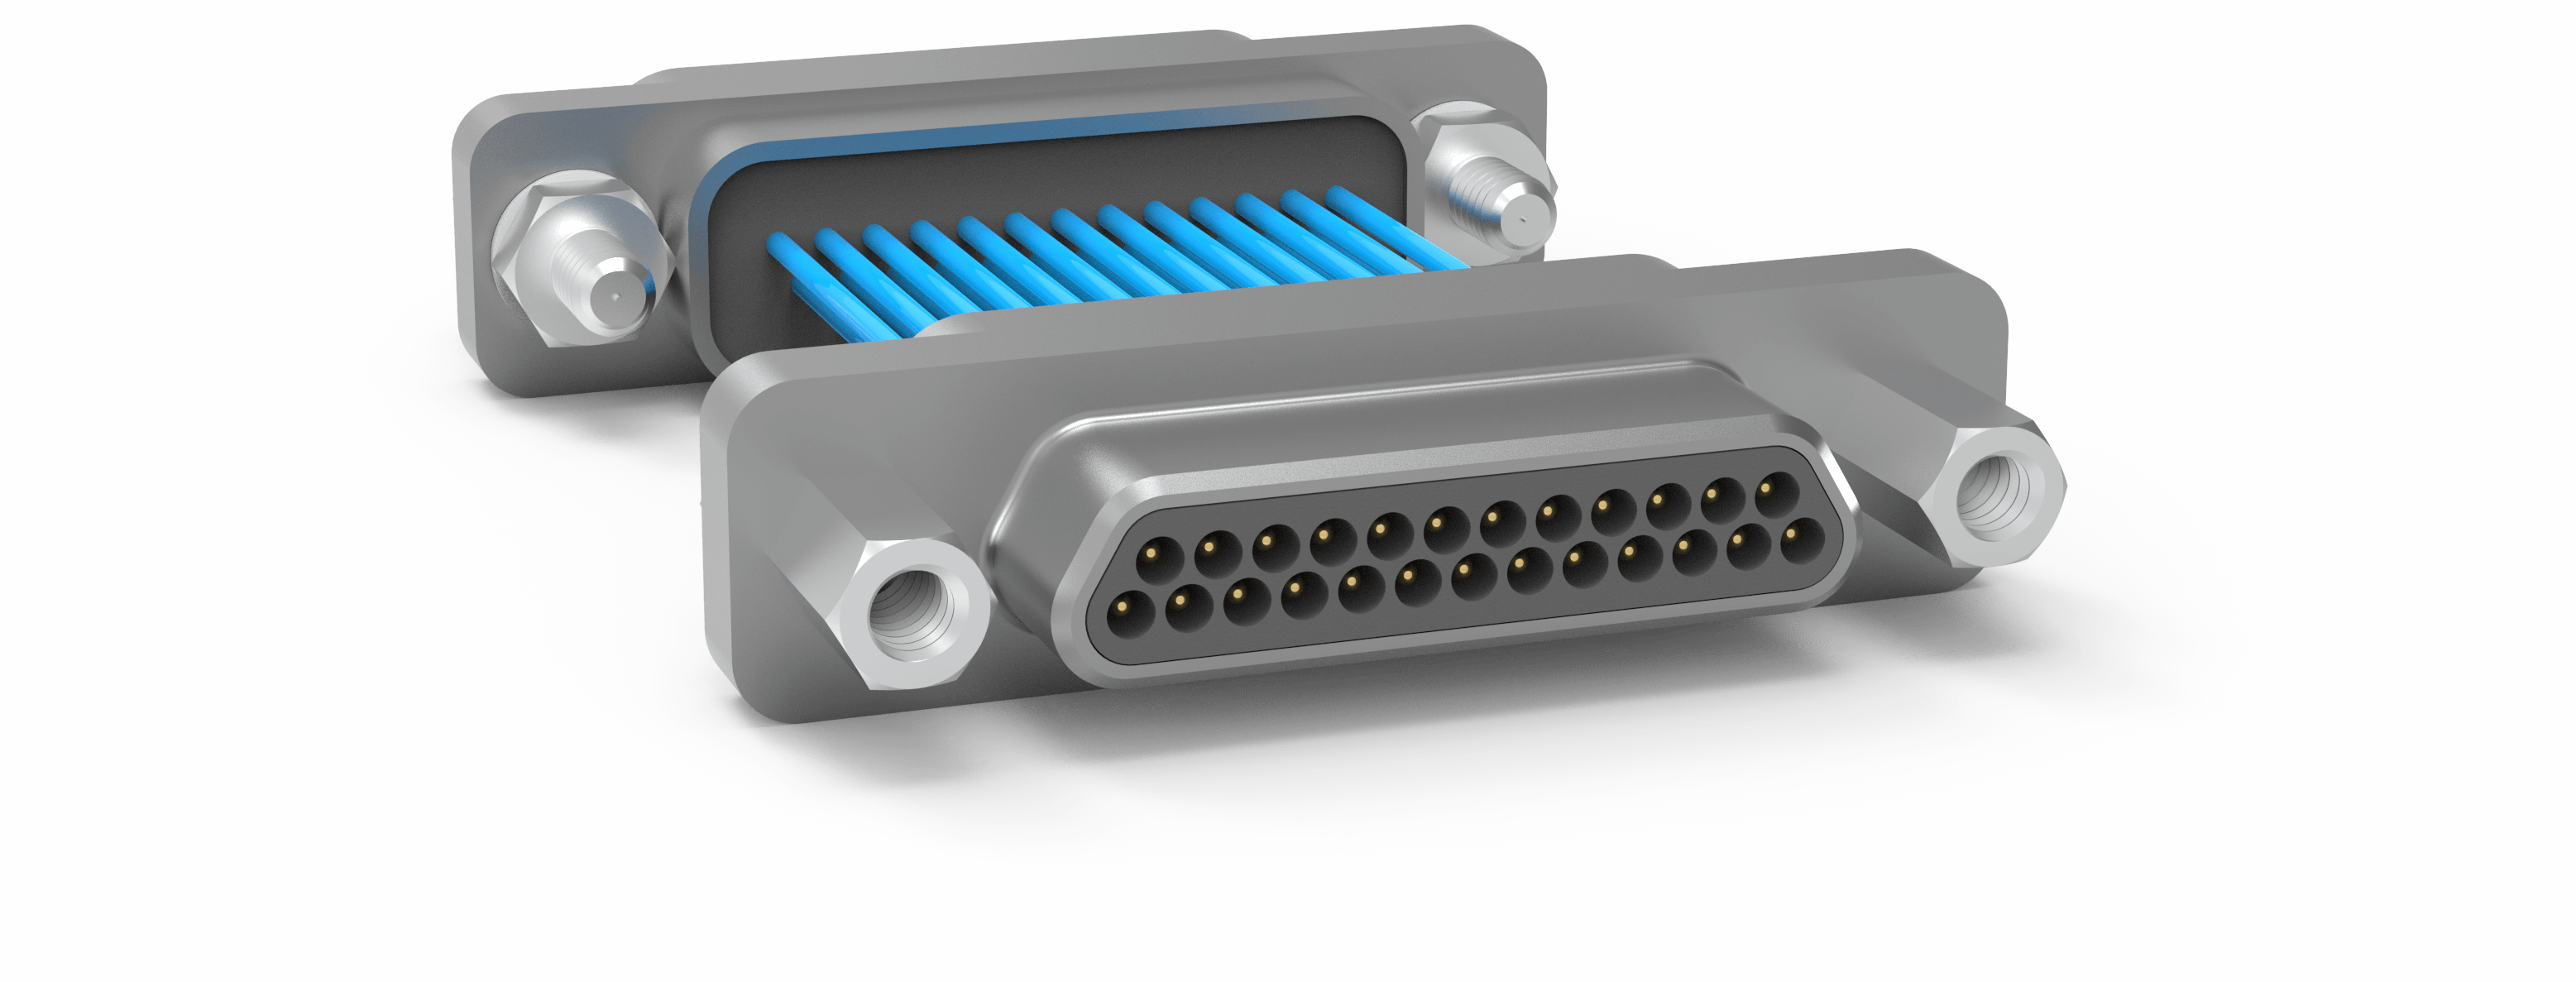 Micro-D, Metal, Rear Panel Mount, Cable Mount Receptacle, Interfacial Seal